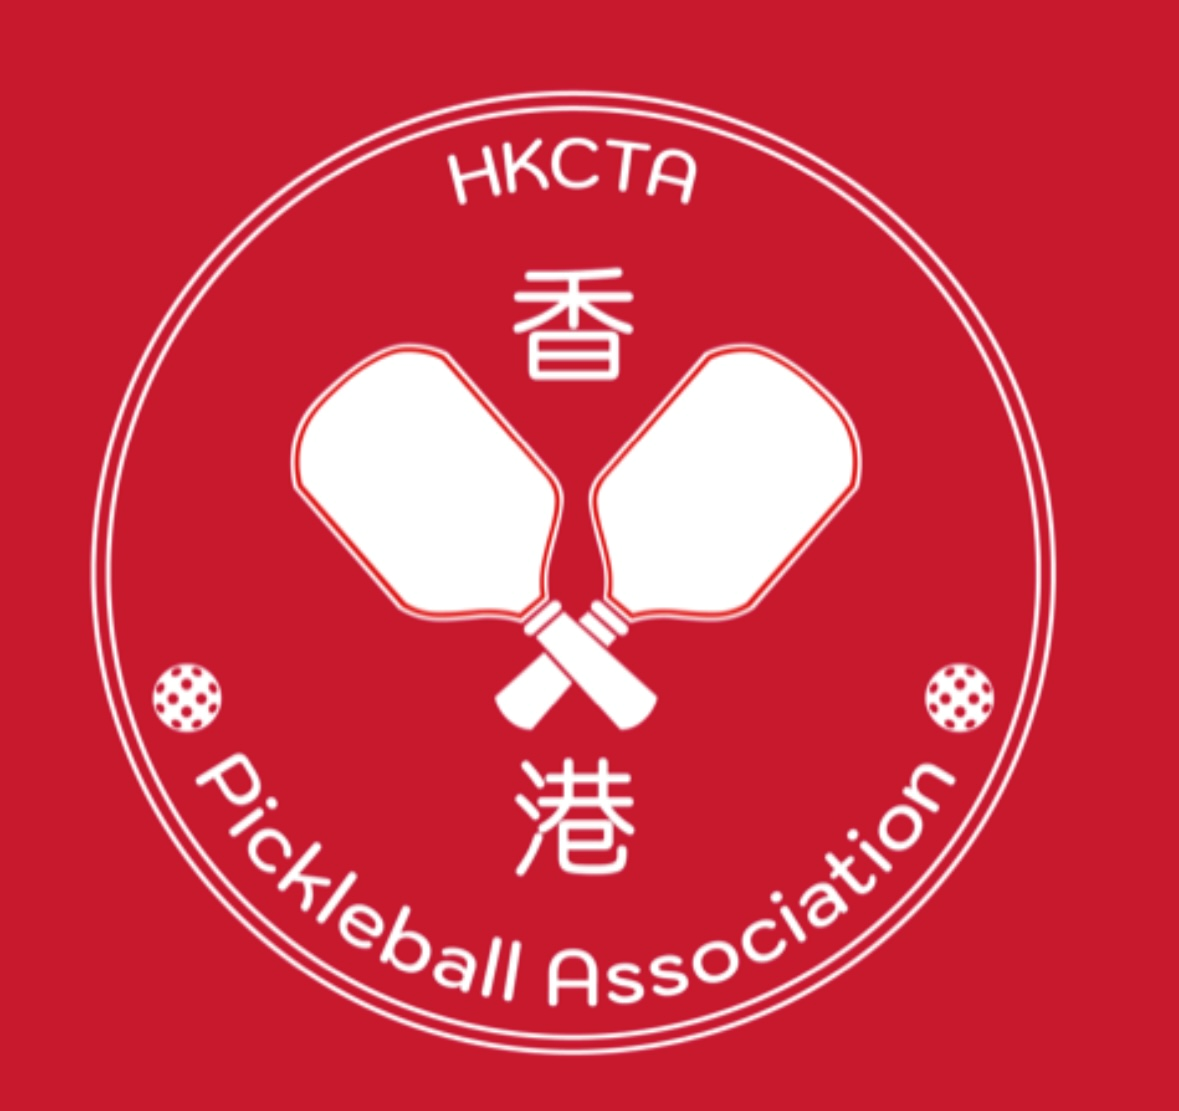 HKCTA Pickleball Association logo